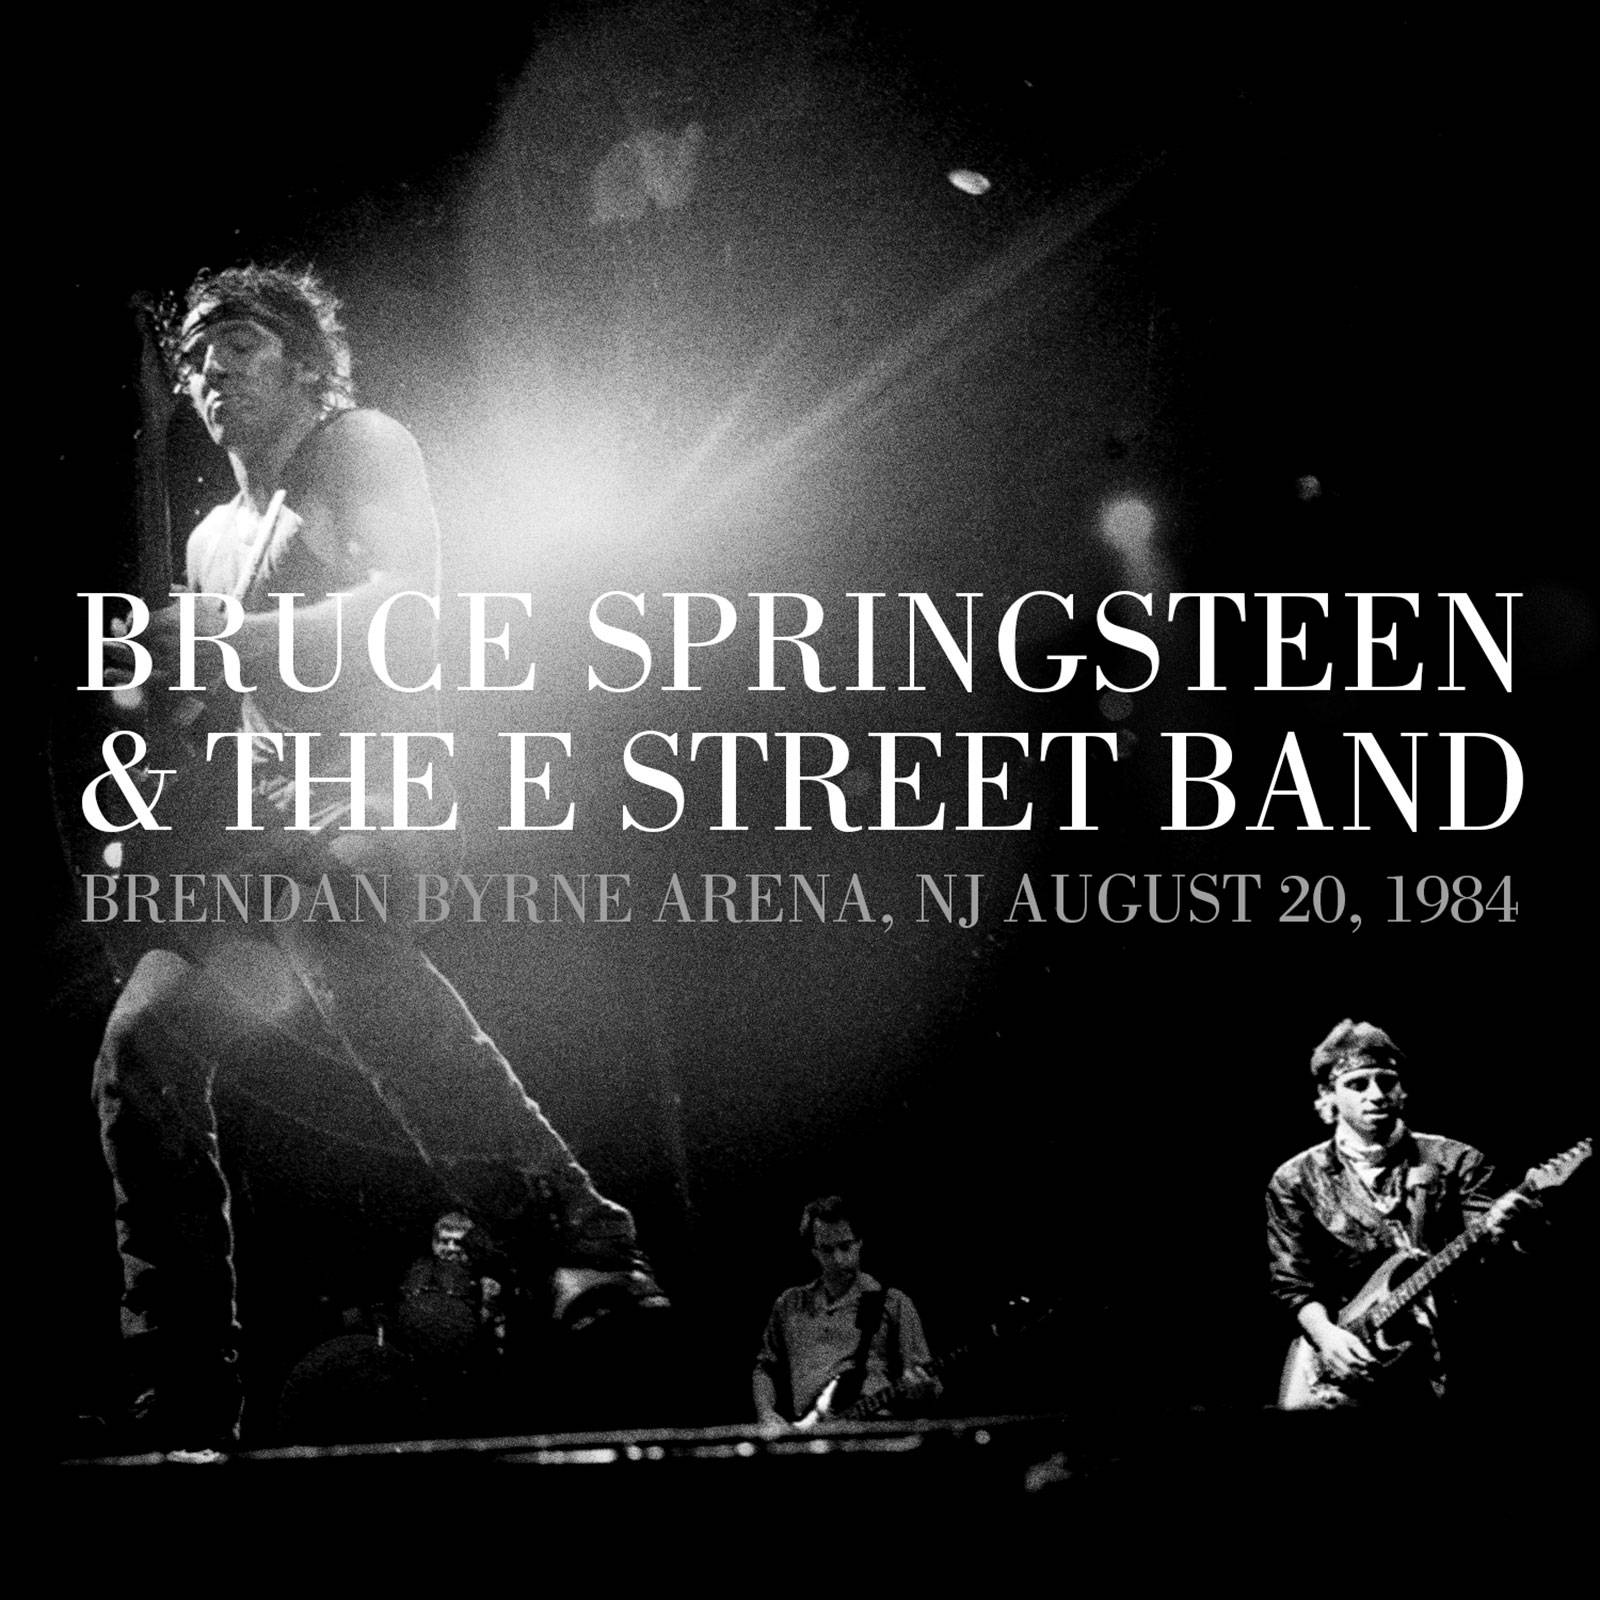 Bruce Springsteen & The E Street Band – 1984-08-20 Brendan Byrne Arena, East Rutherford, NJ (2018) [FLAC 24bit/192kHz]